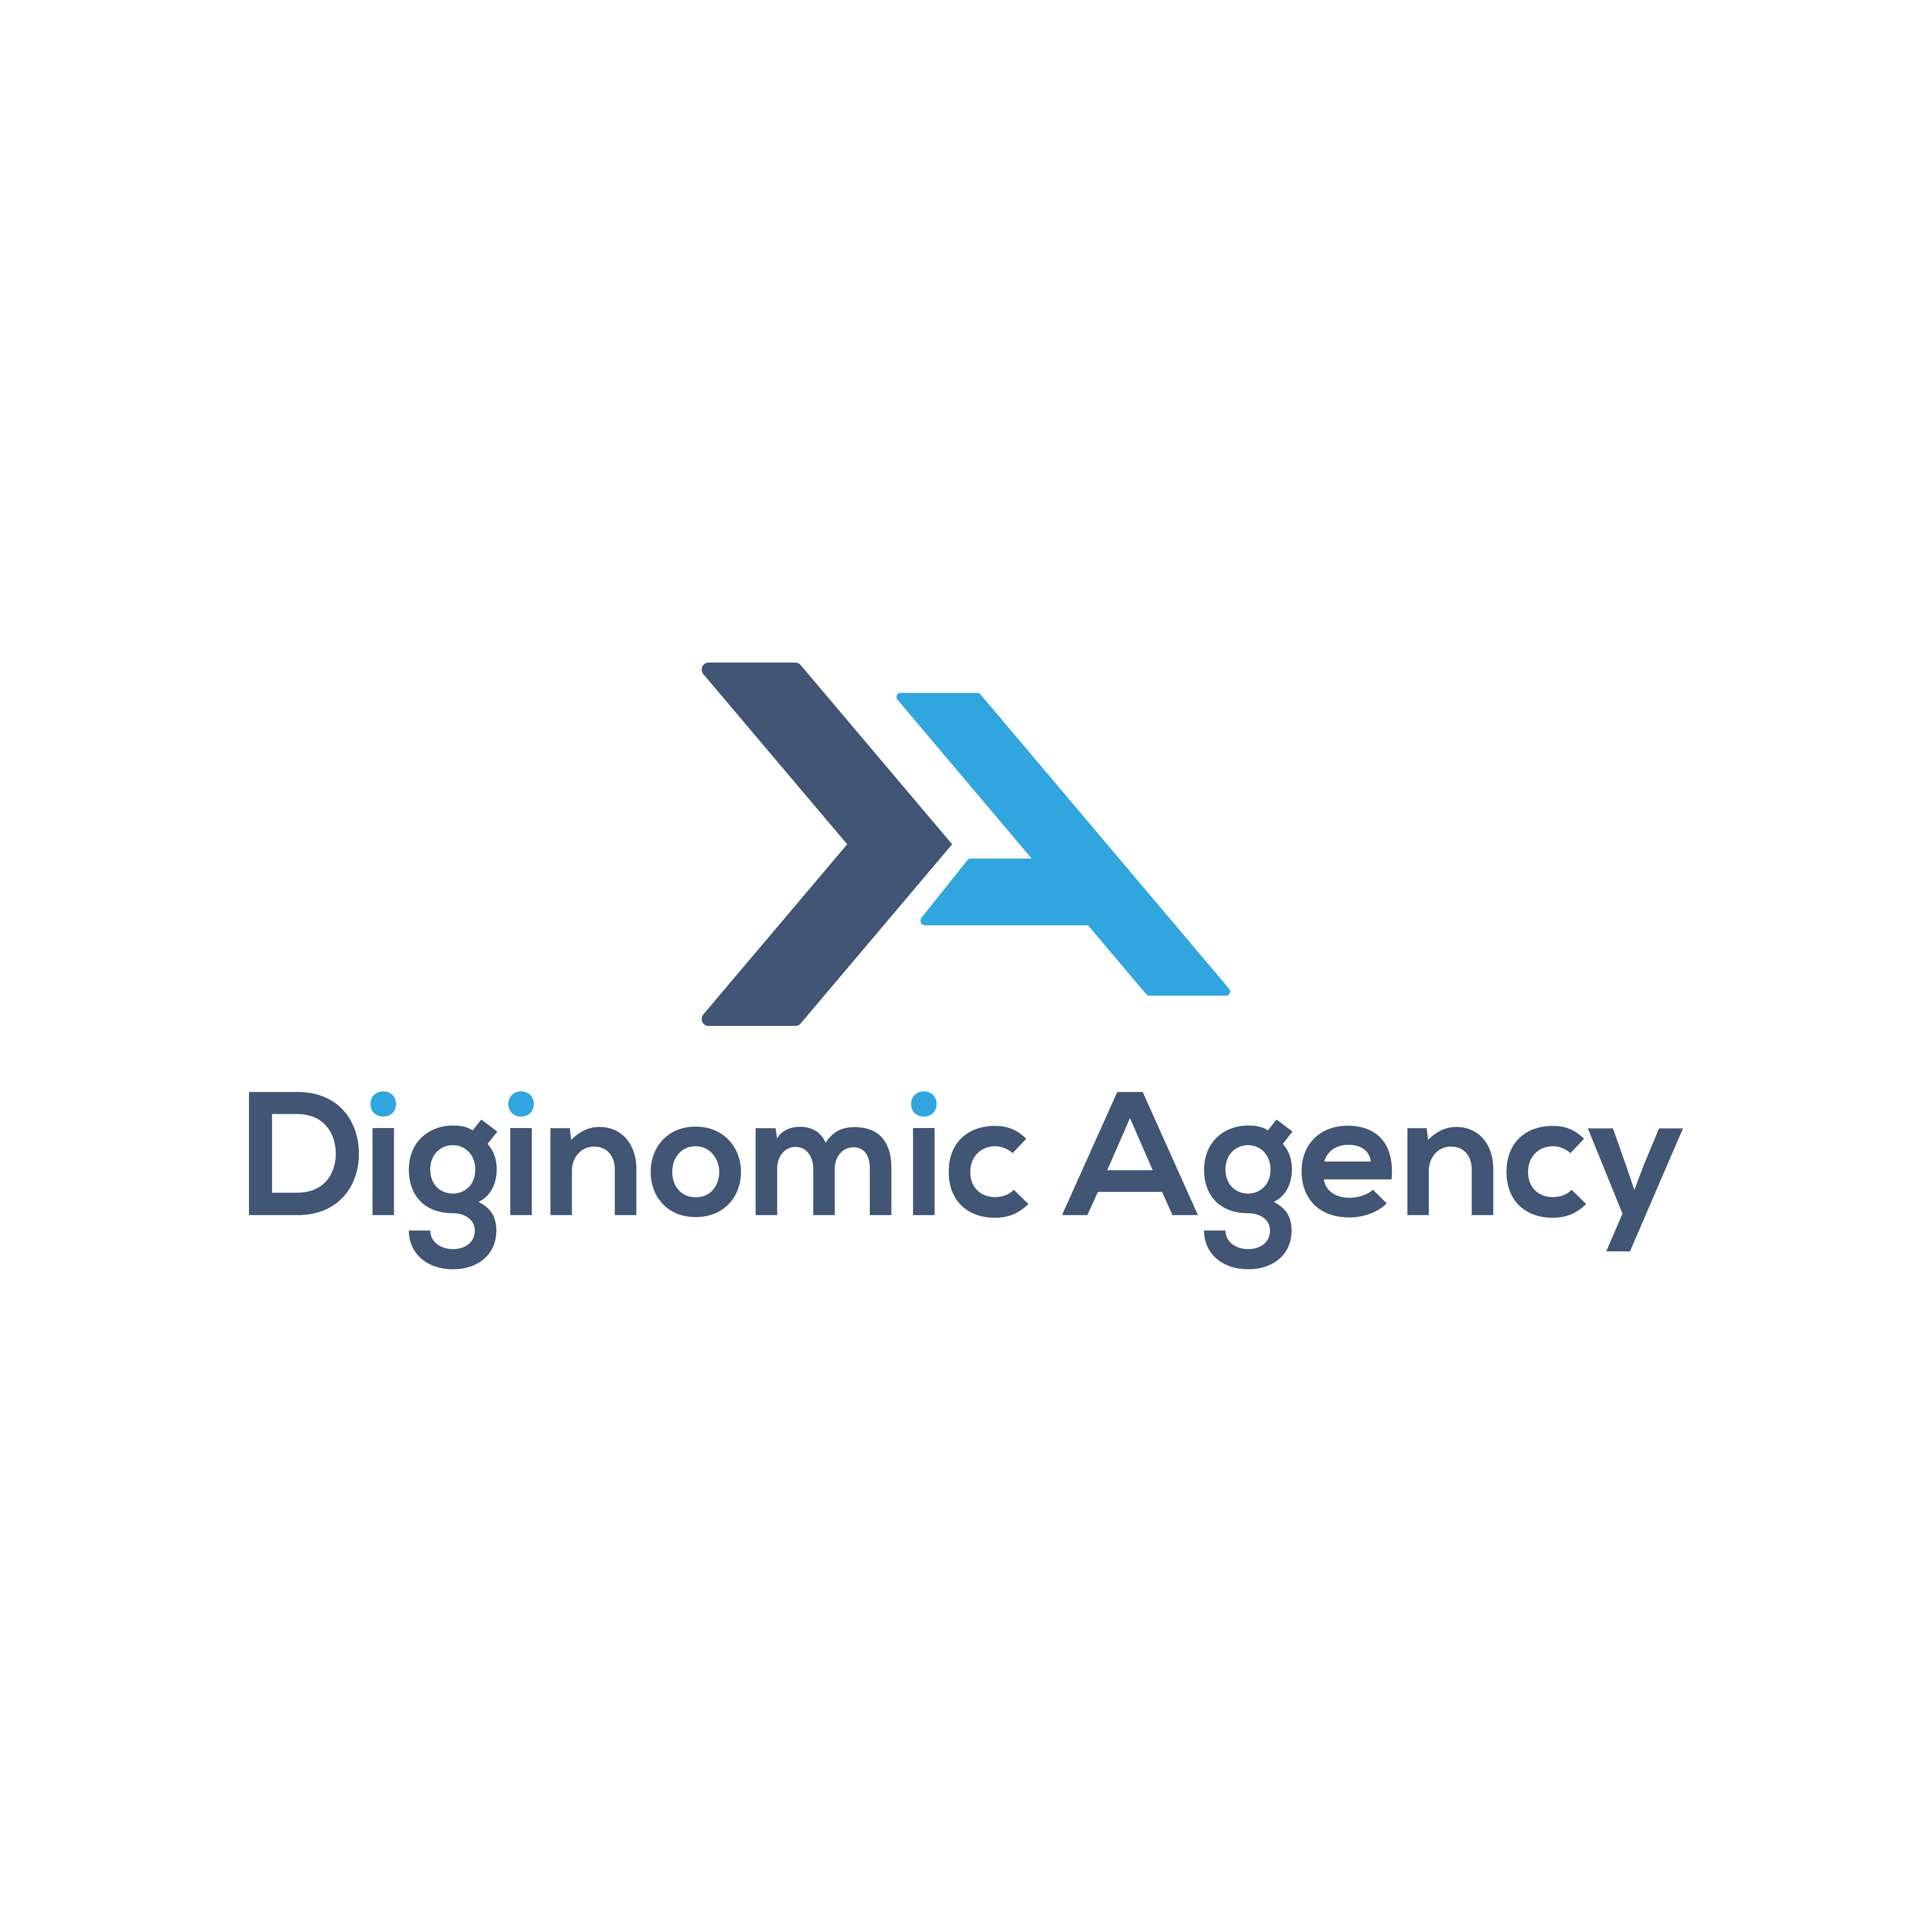 Diginomic Agency